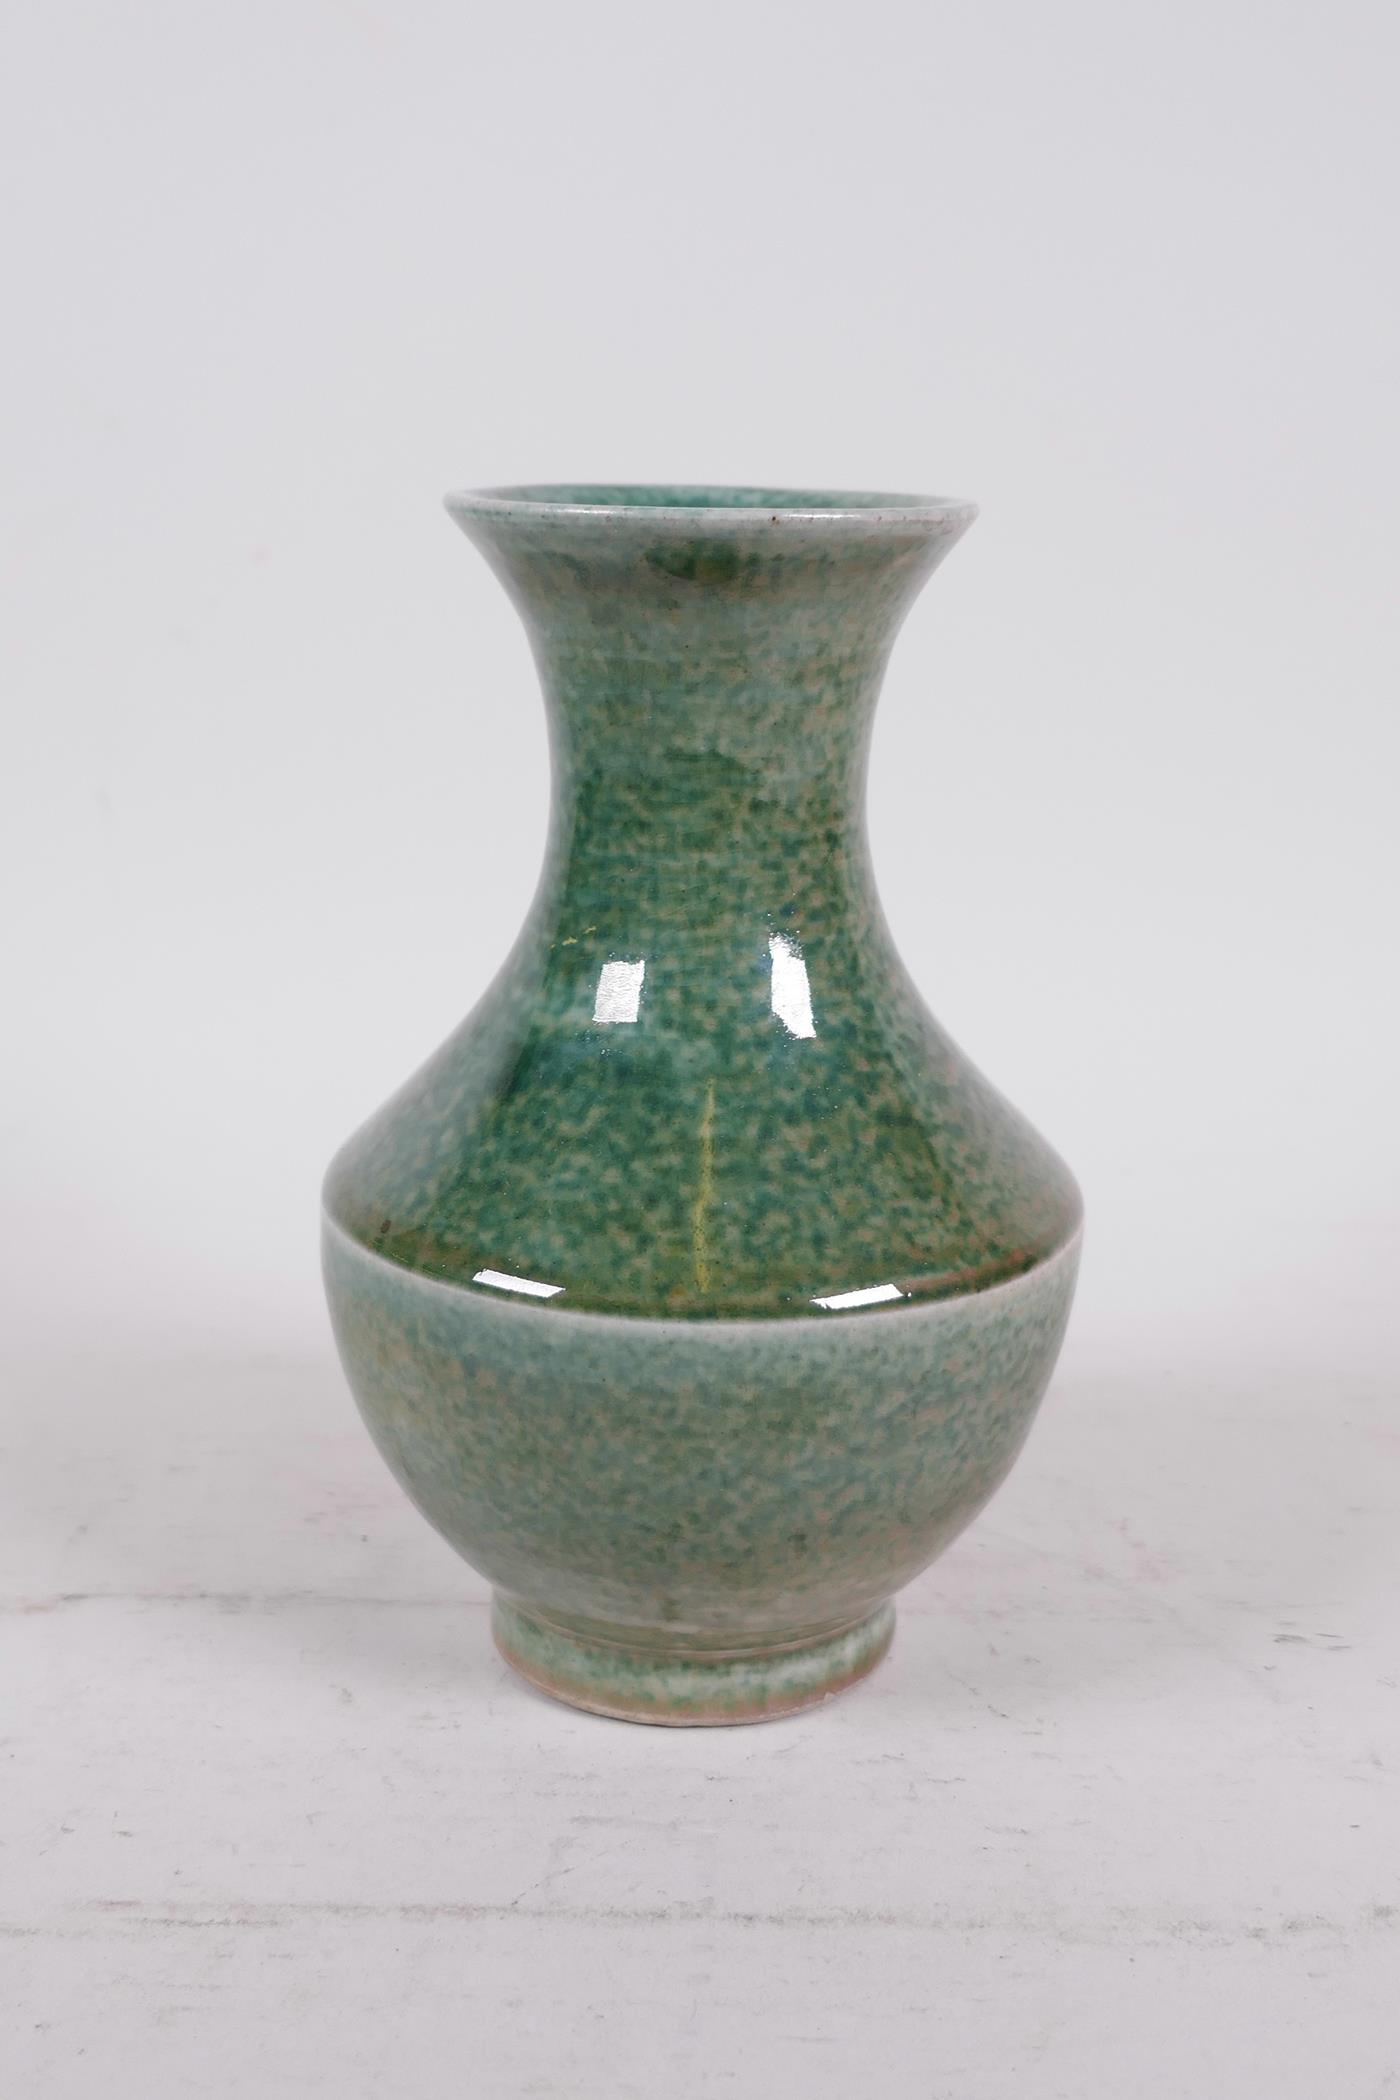 A Chinese mottled green glazed pottery vase, 6" high